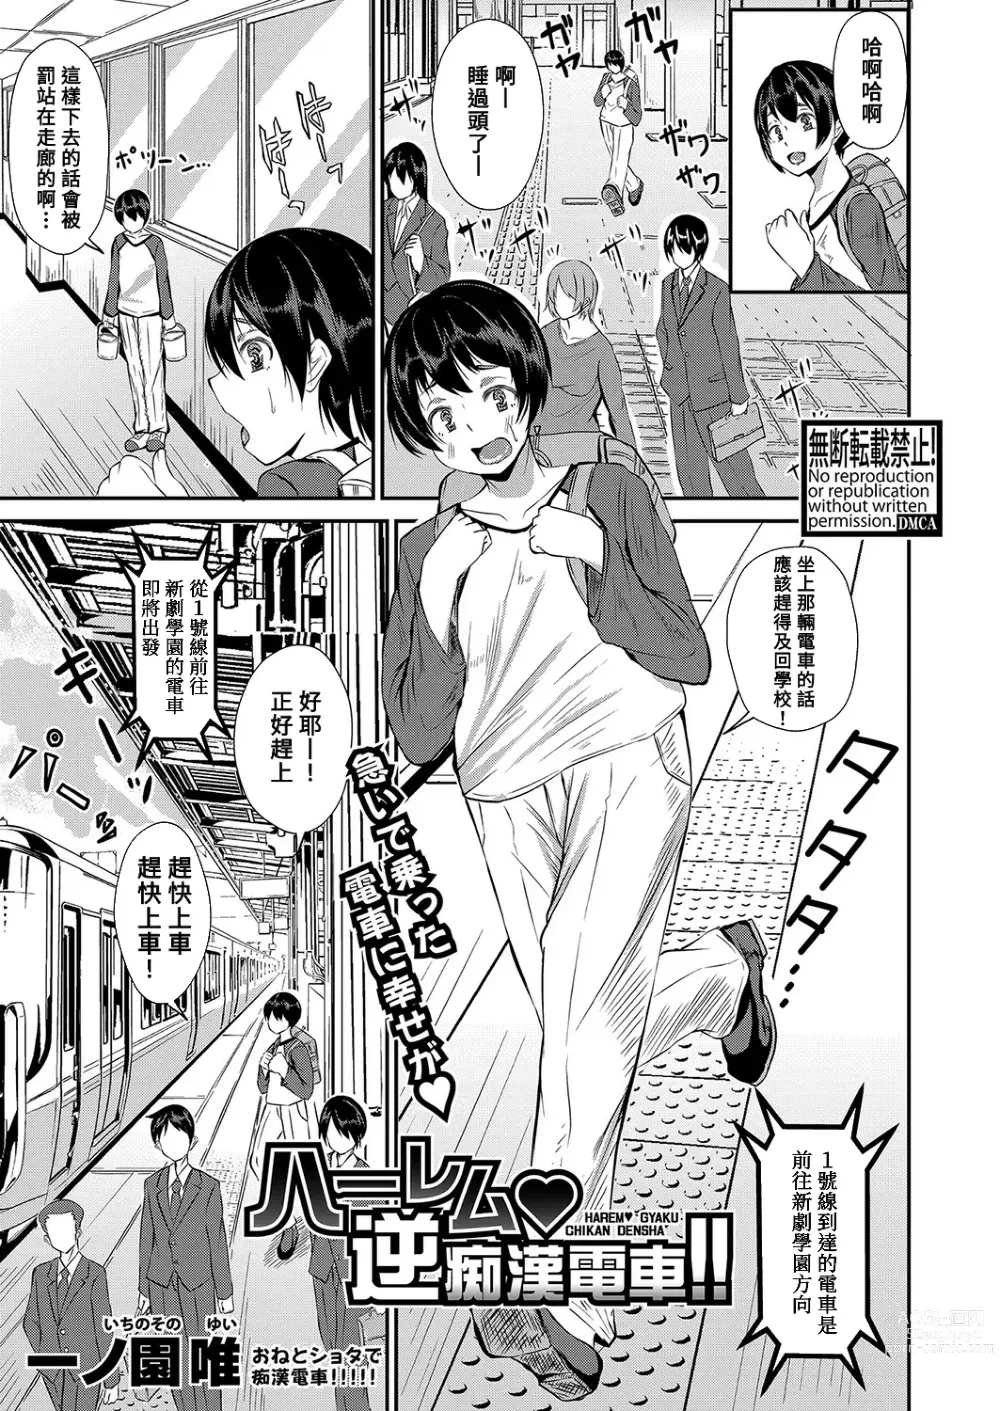 Page 1 of manga Harem Gyaku Chikan Densha!!